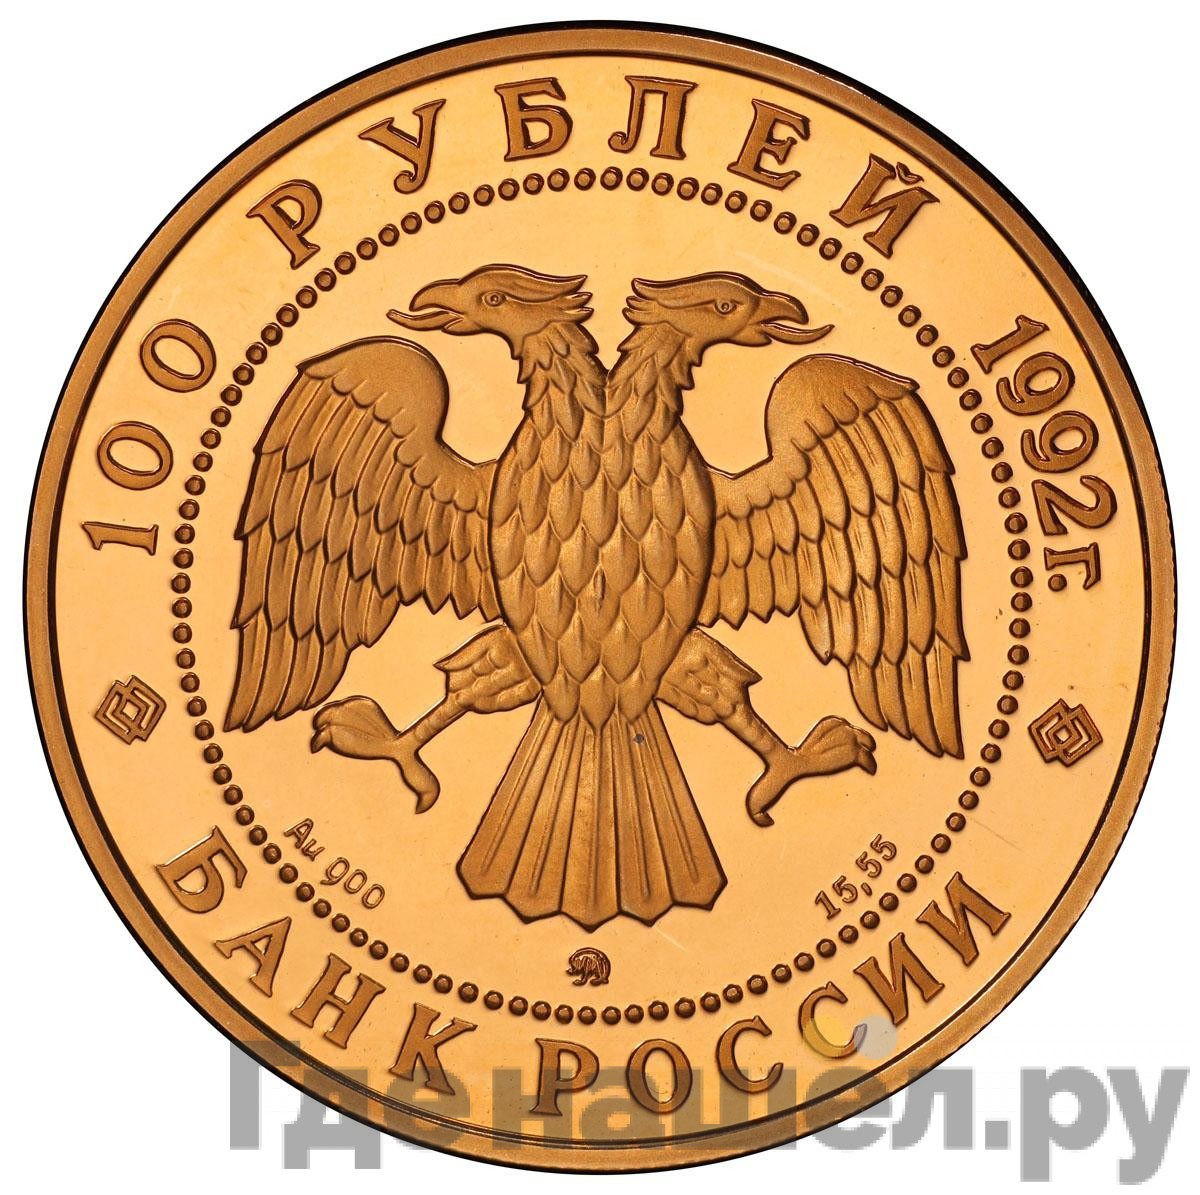 100 рублей 1992 года ММД Россия Саха Якутия 1632